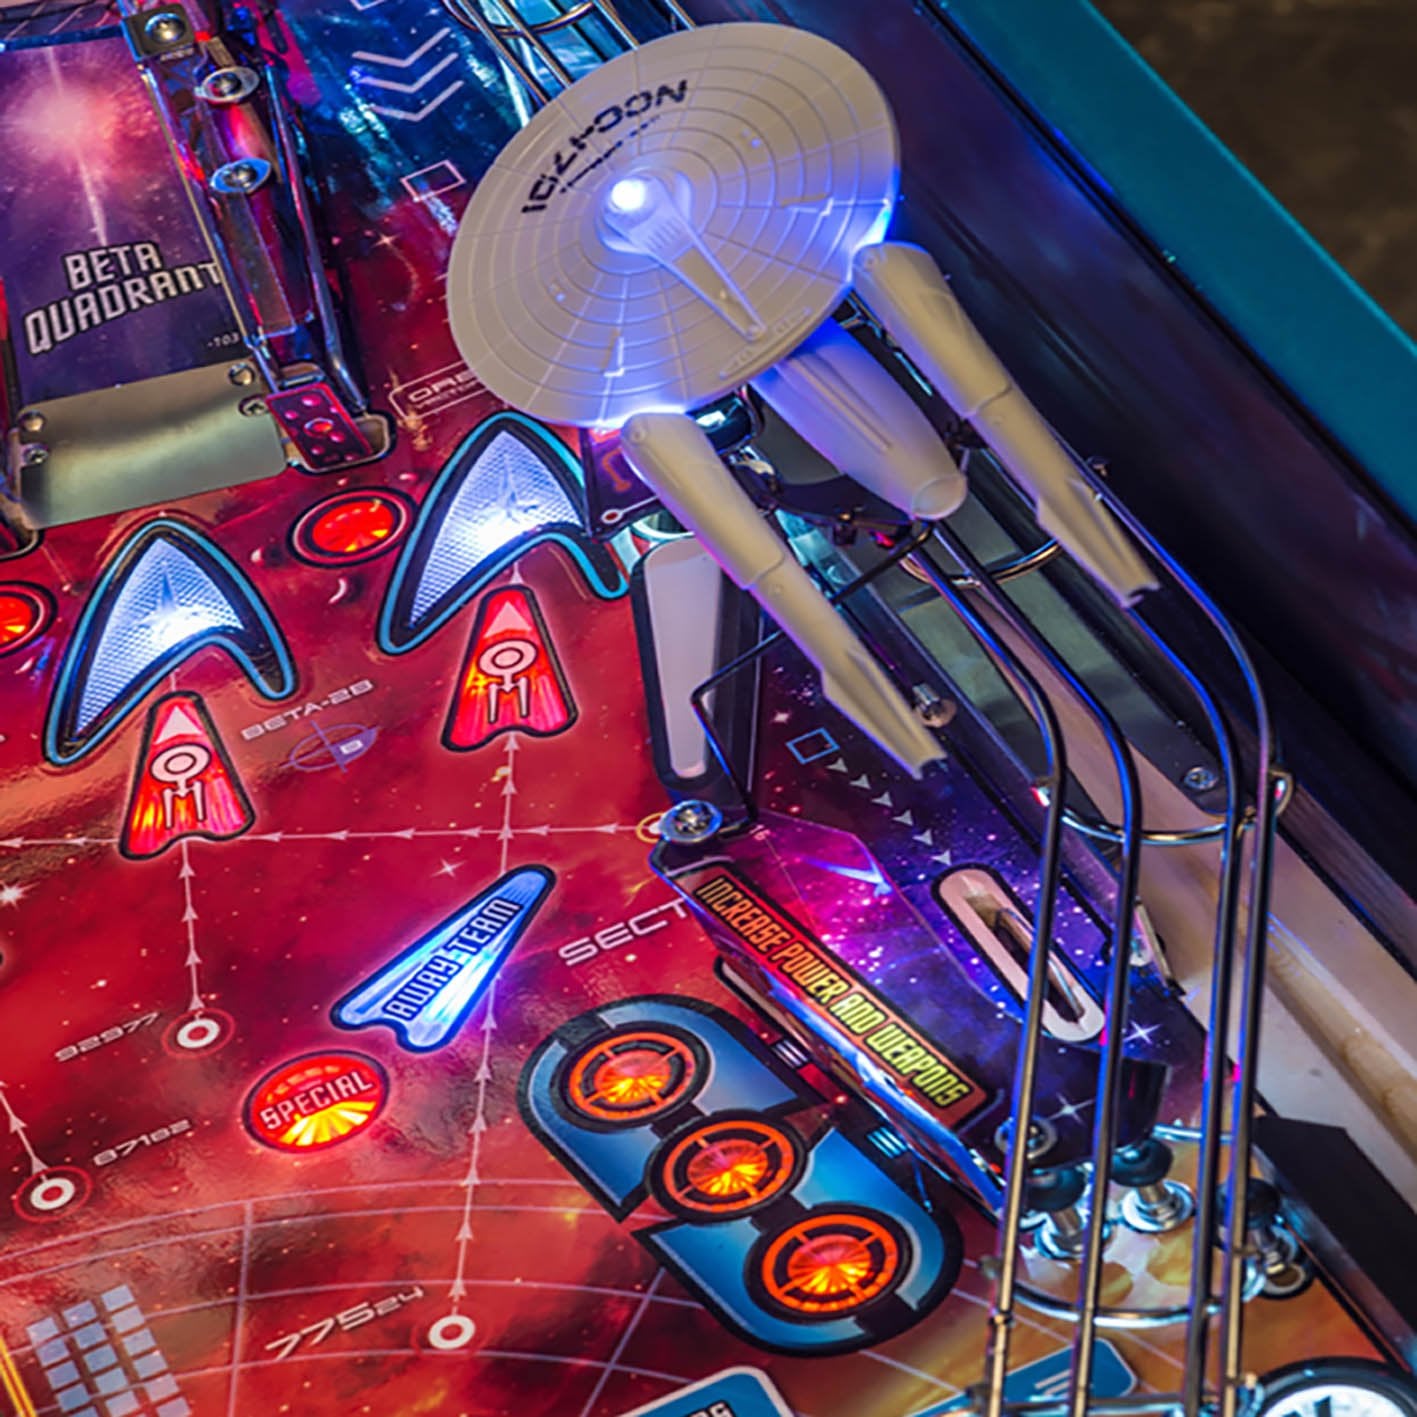 2013 Star Trek Pro Pinball Machine by Stern